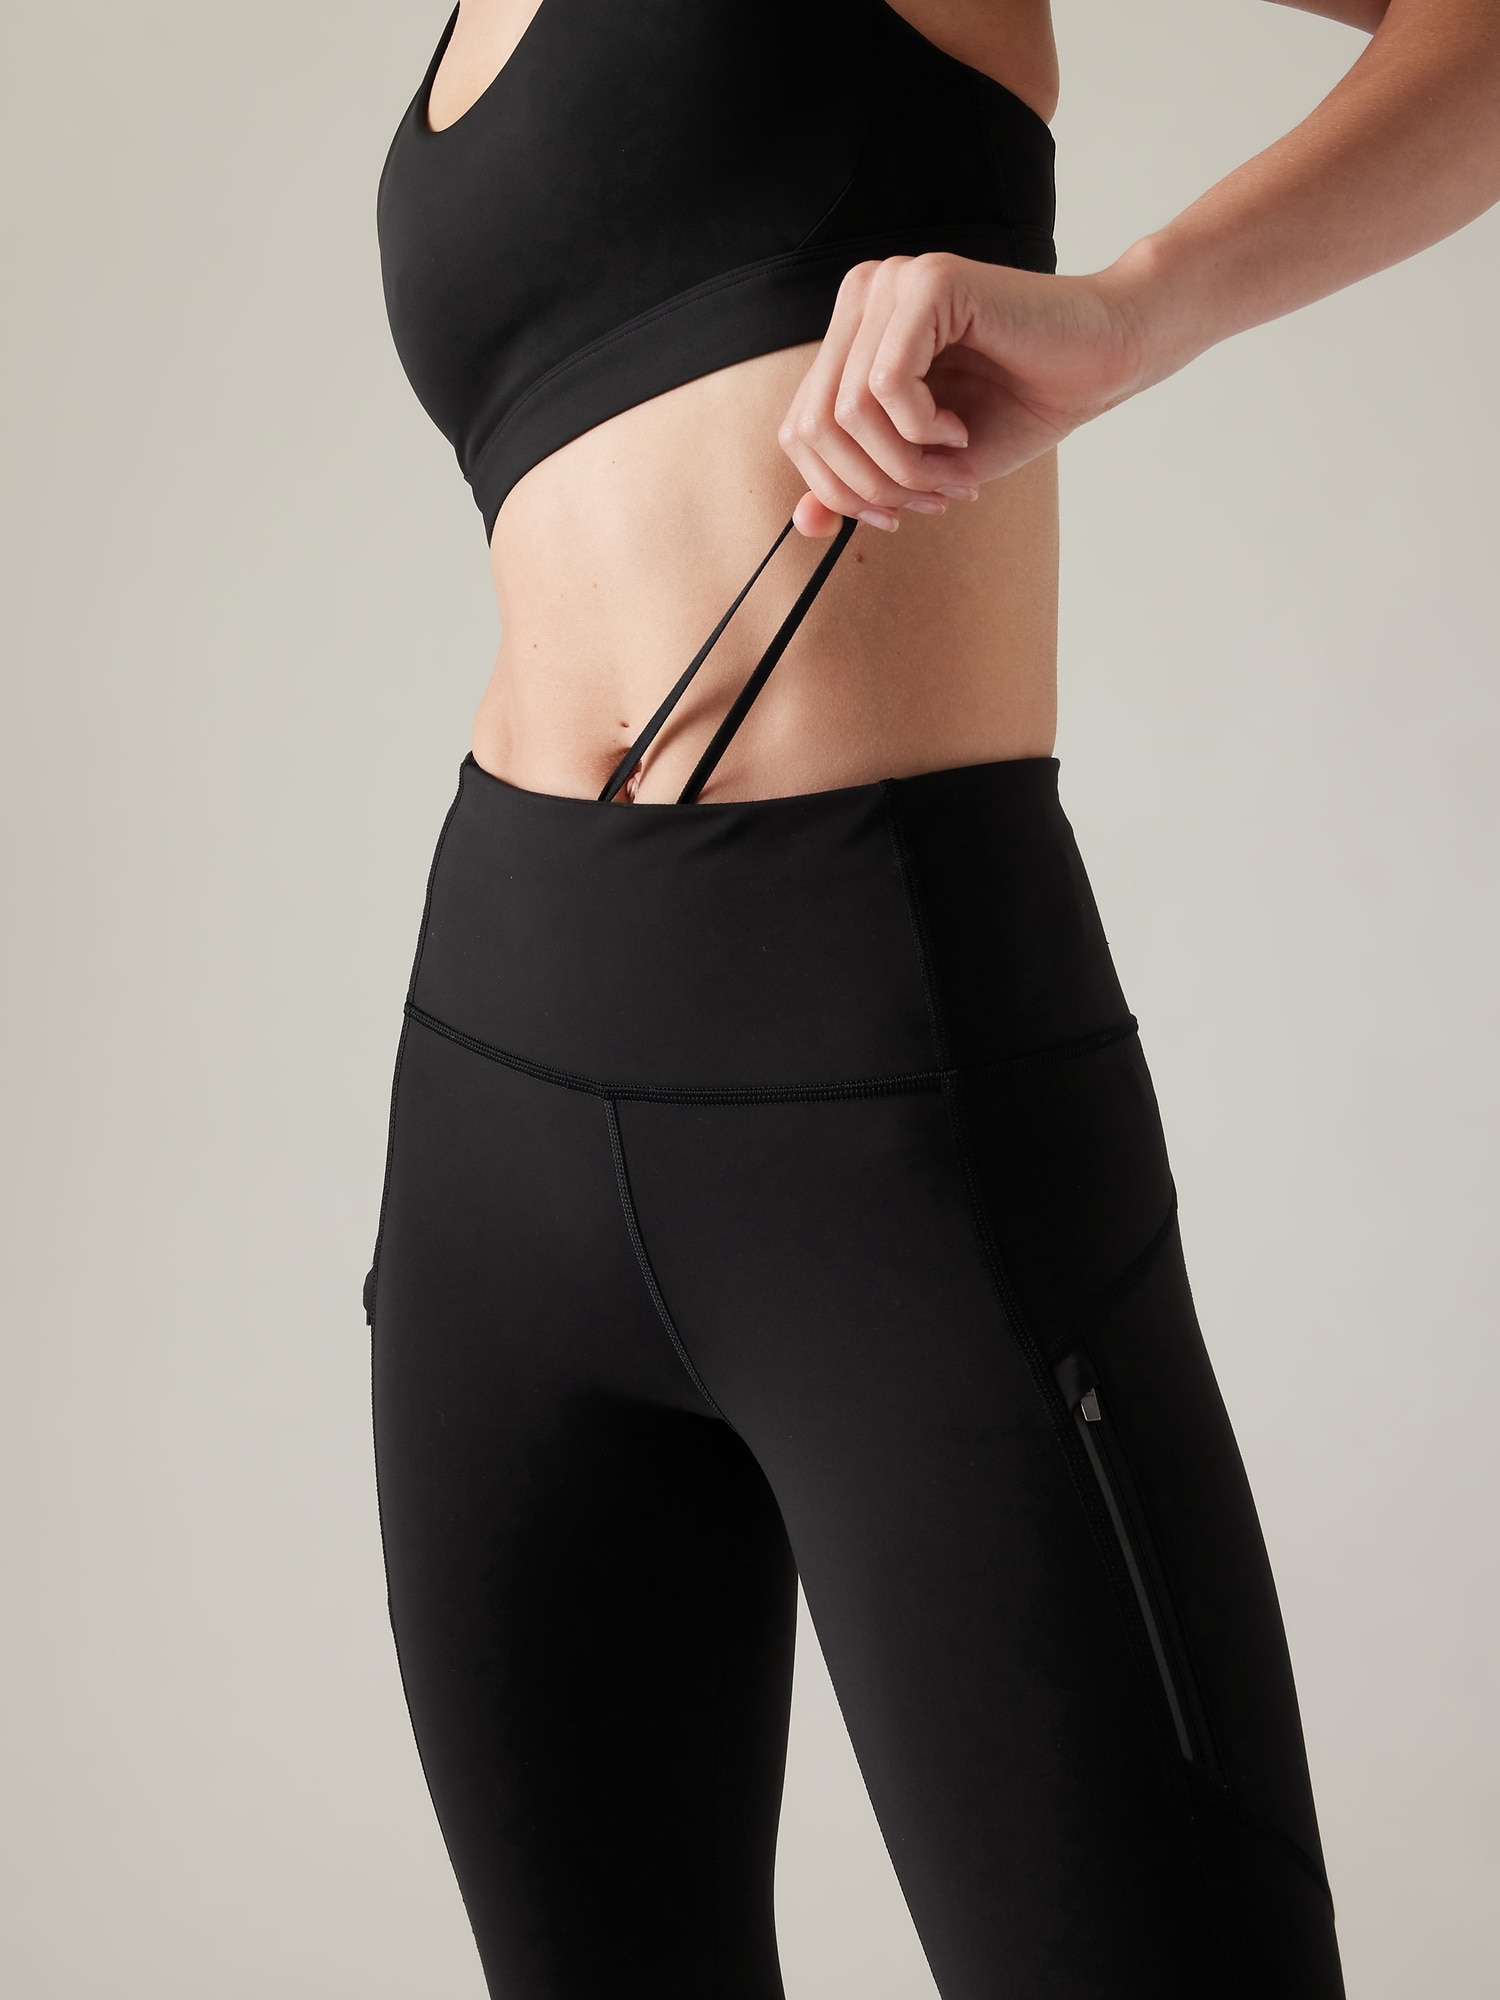 New womens sz xl athleta rainier reflective tight camo 7/8 workout leggings